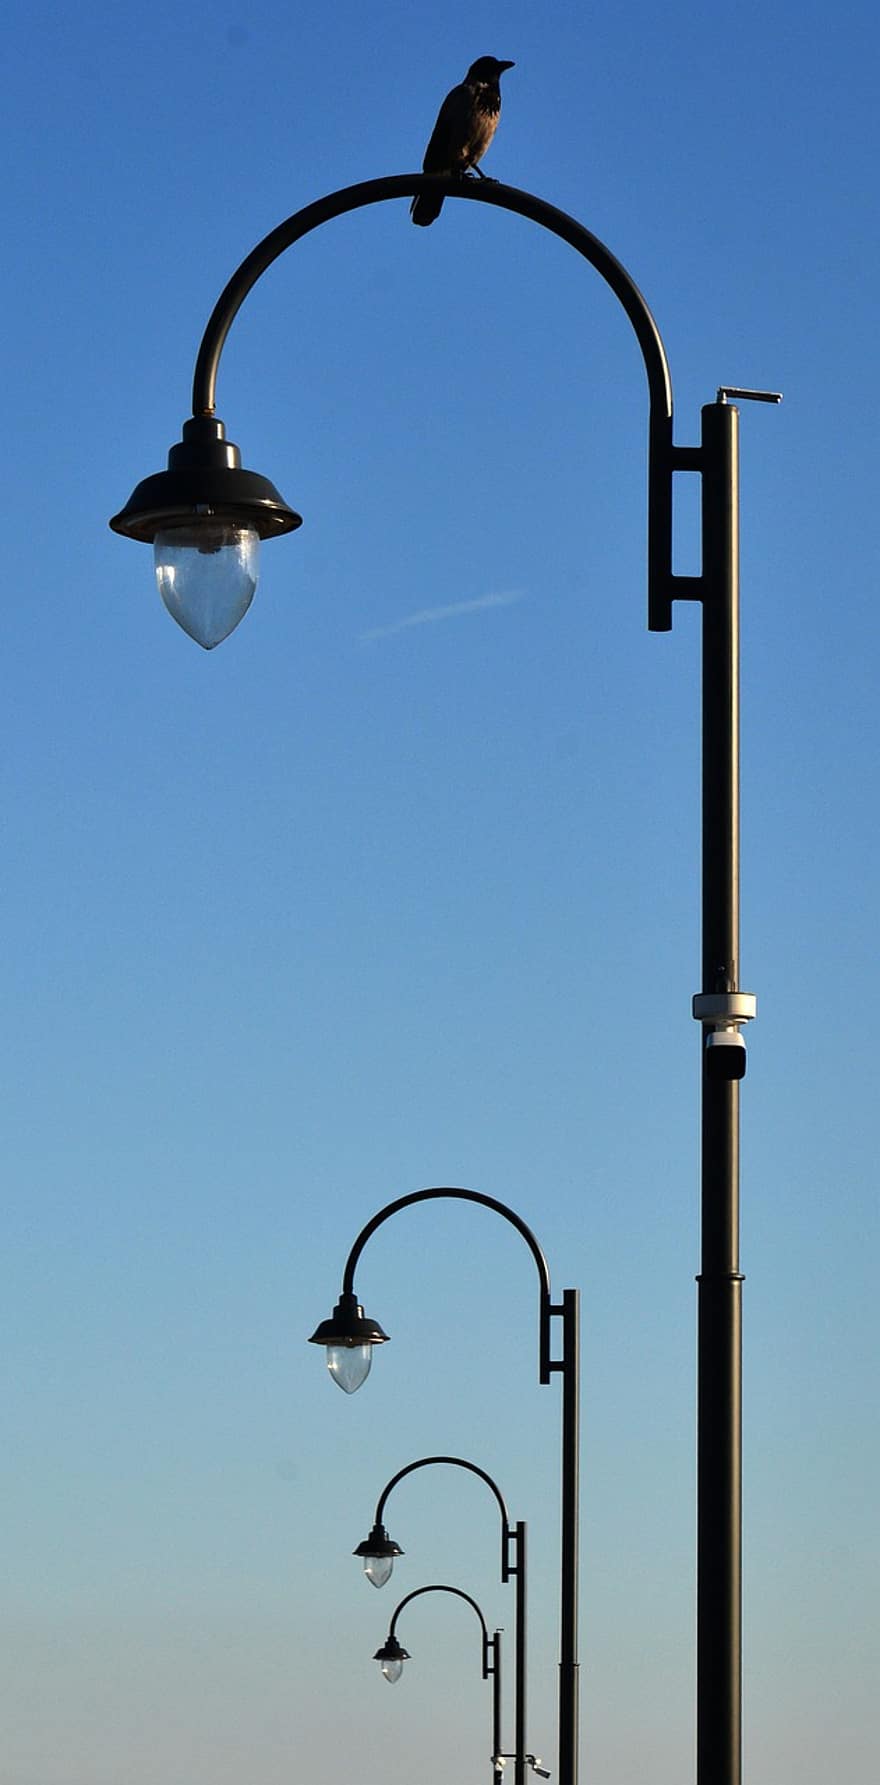 Corvo, céu, poste de iluminação, pássaro, lanterna, lâmpada elétrica, azul, iluminação pública, silhueta, gaivota, pólo